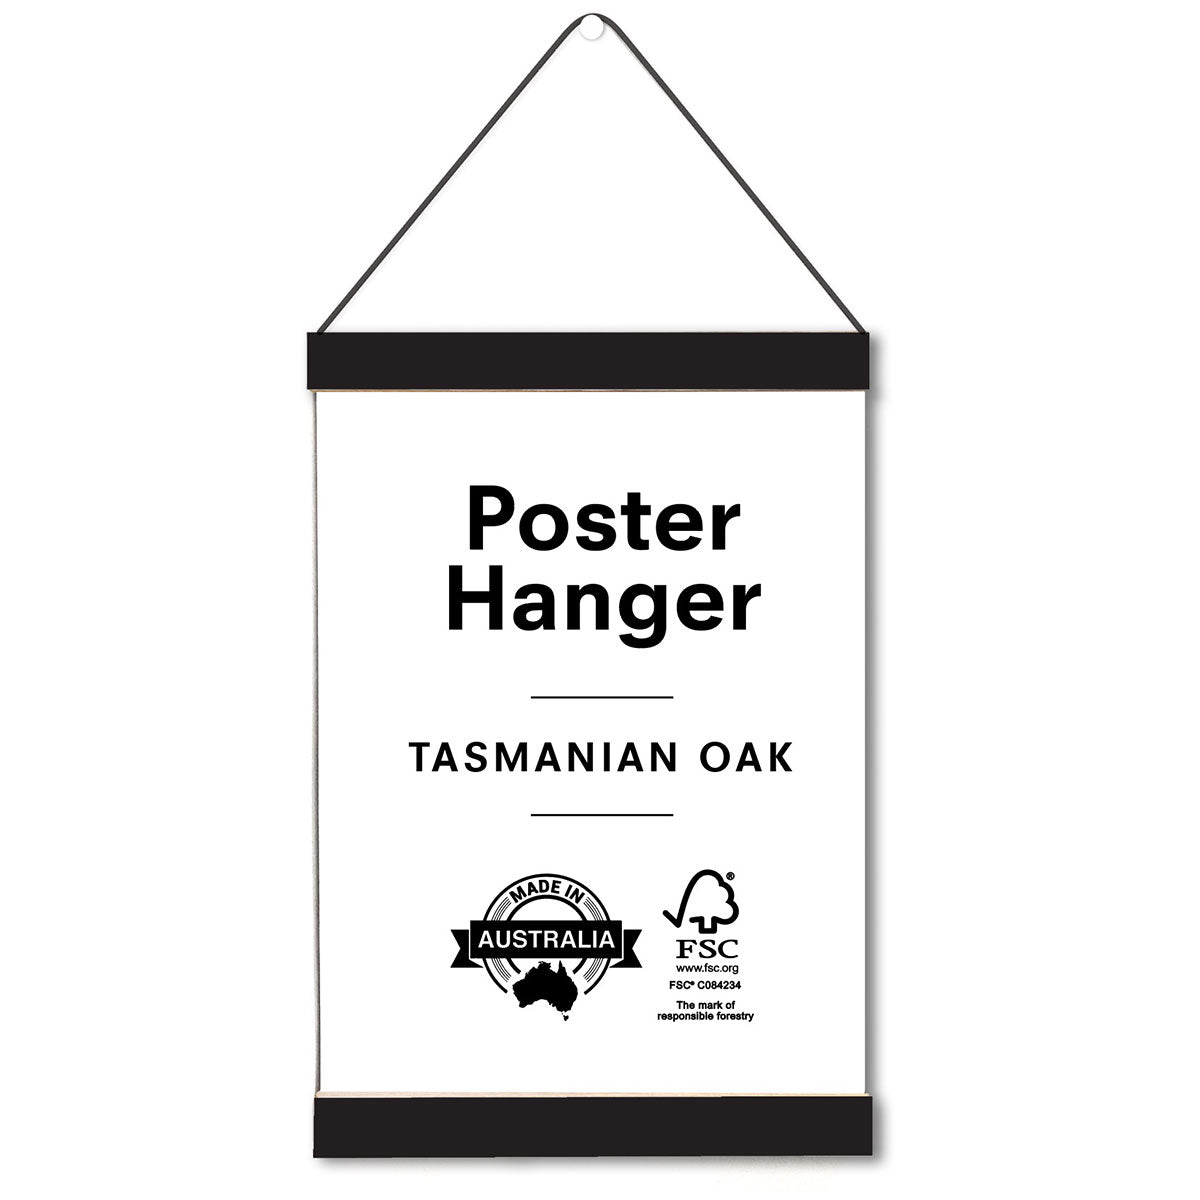 Poster hanger in Tasmanian Oak, Black Colour